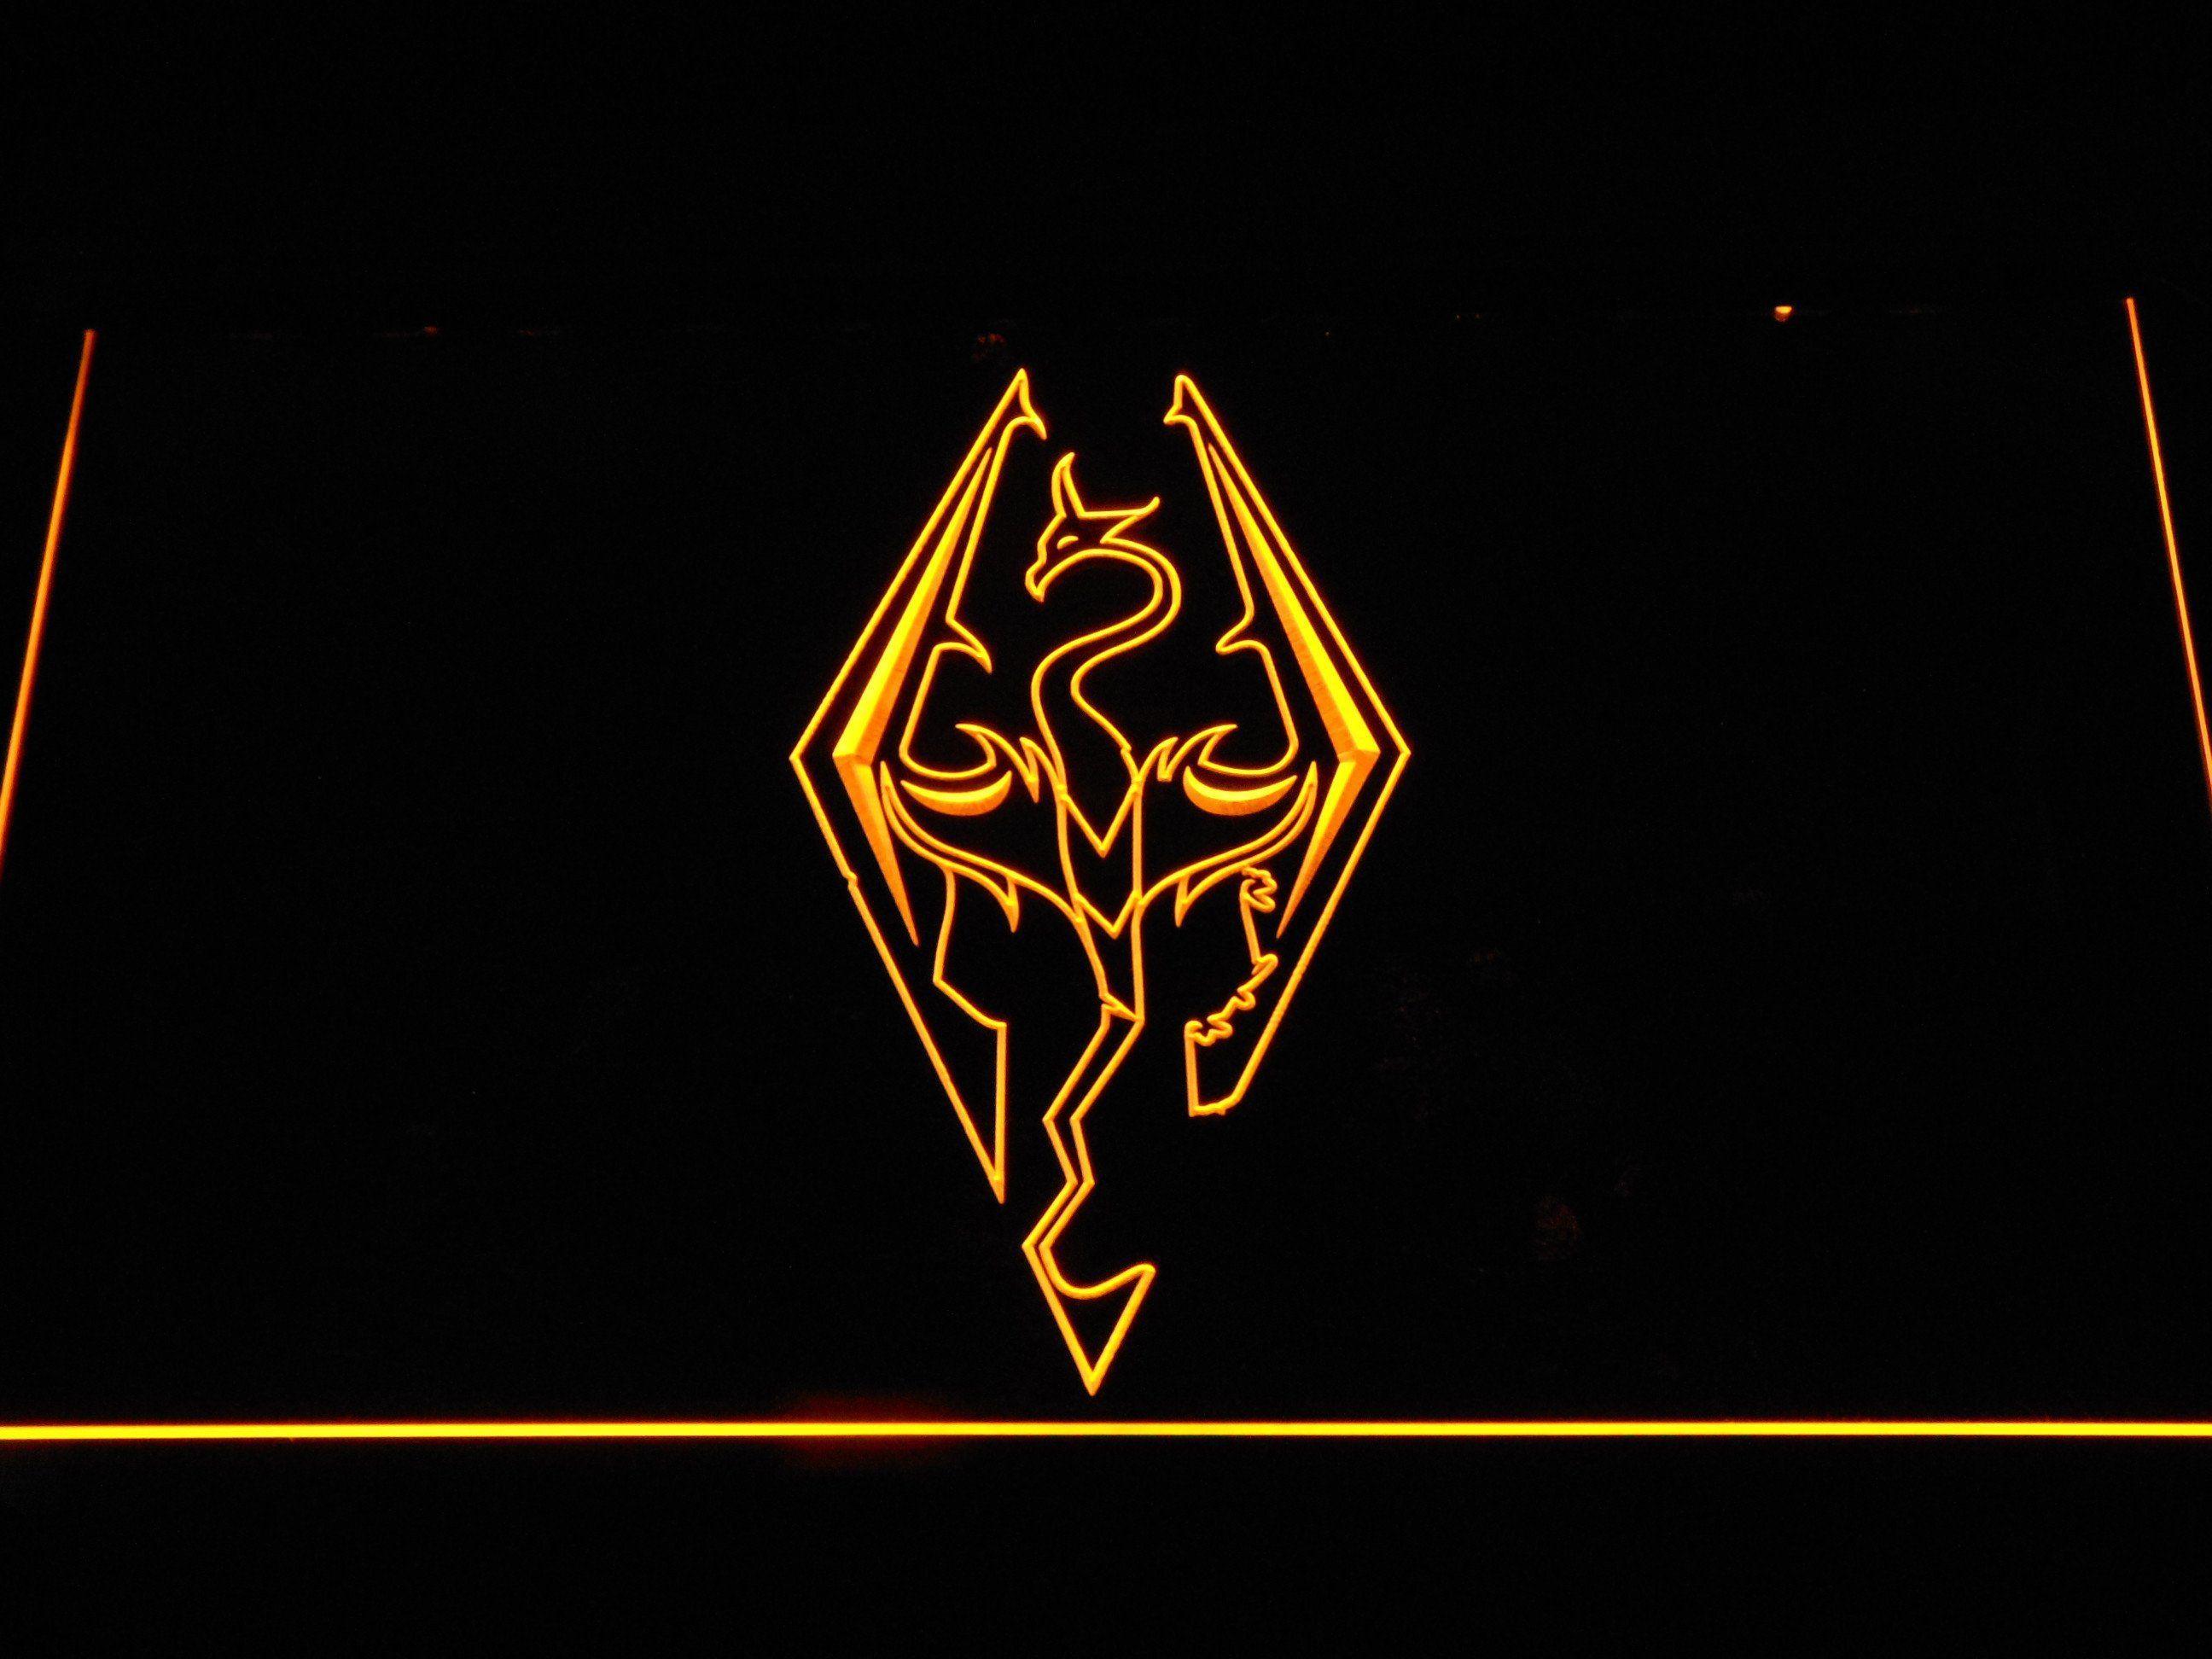 Cool Gold Dragon Logo - Skyrim Dragon Logo LED Neon Sign | Products | Led neon signs, Logos ...